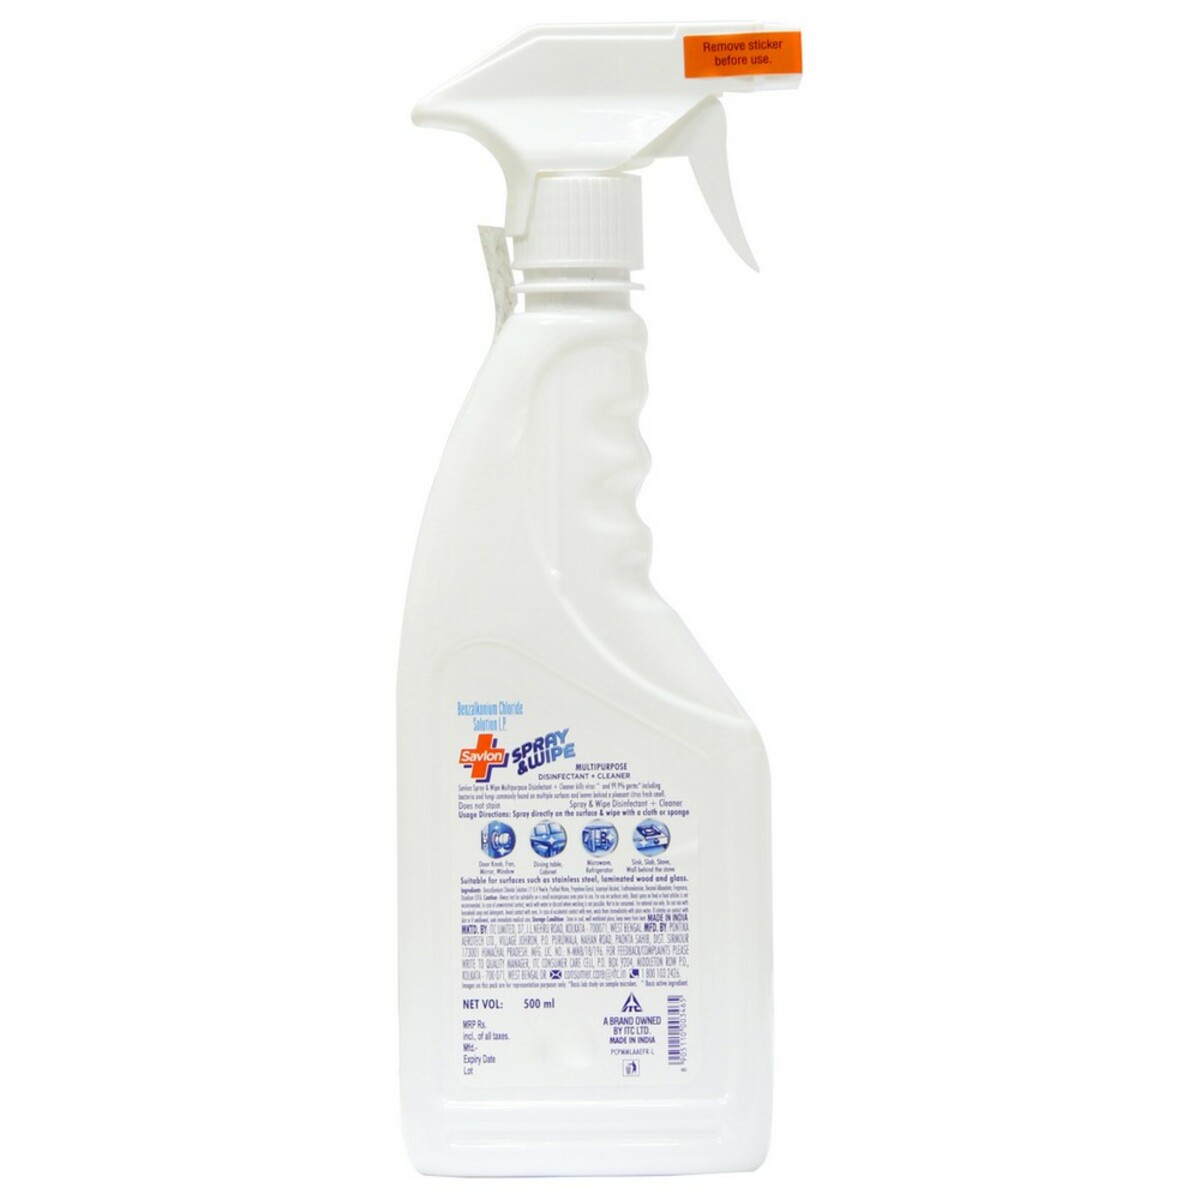 Savlon Spray & Wipe Disinfectant Cleaner 500ml